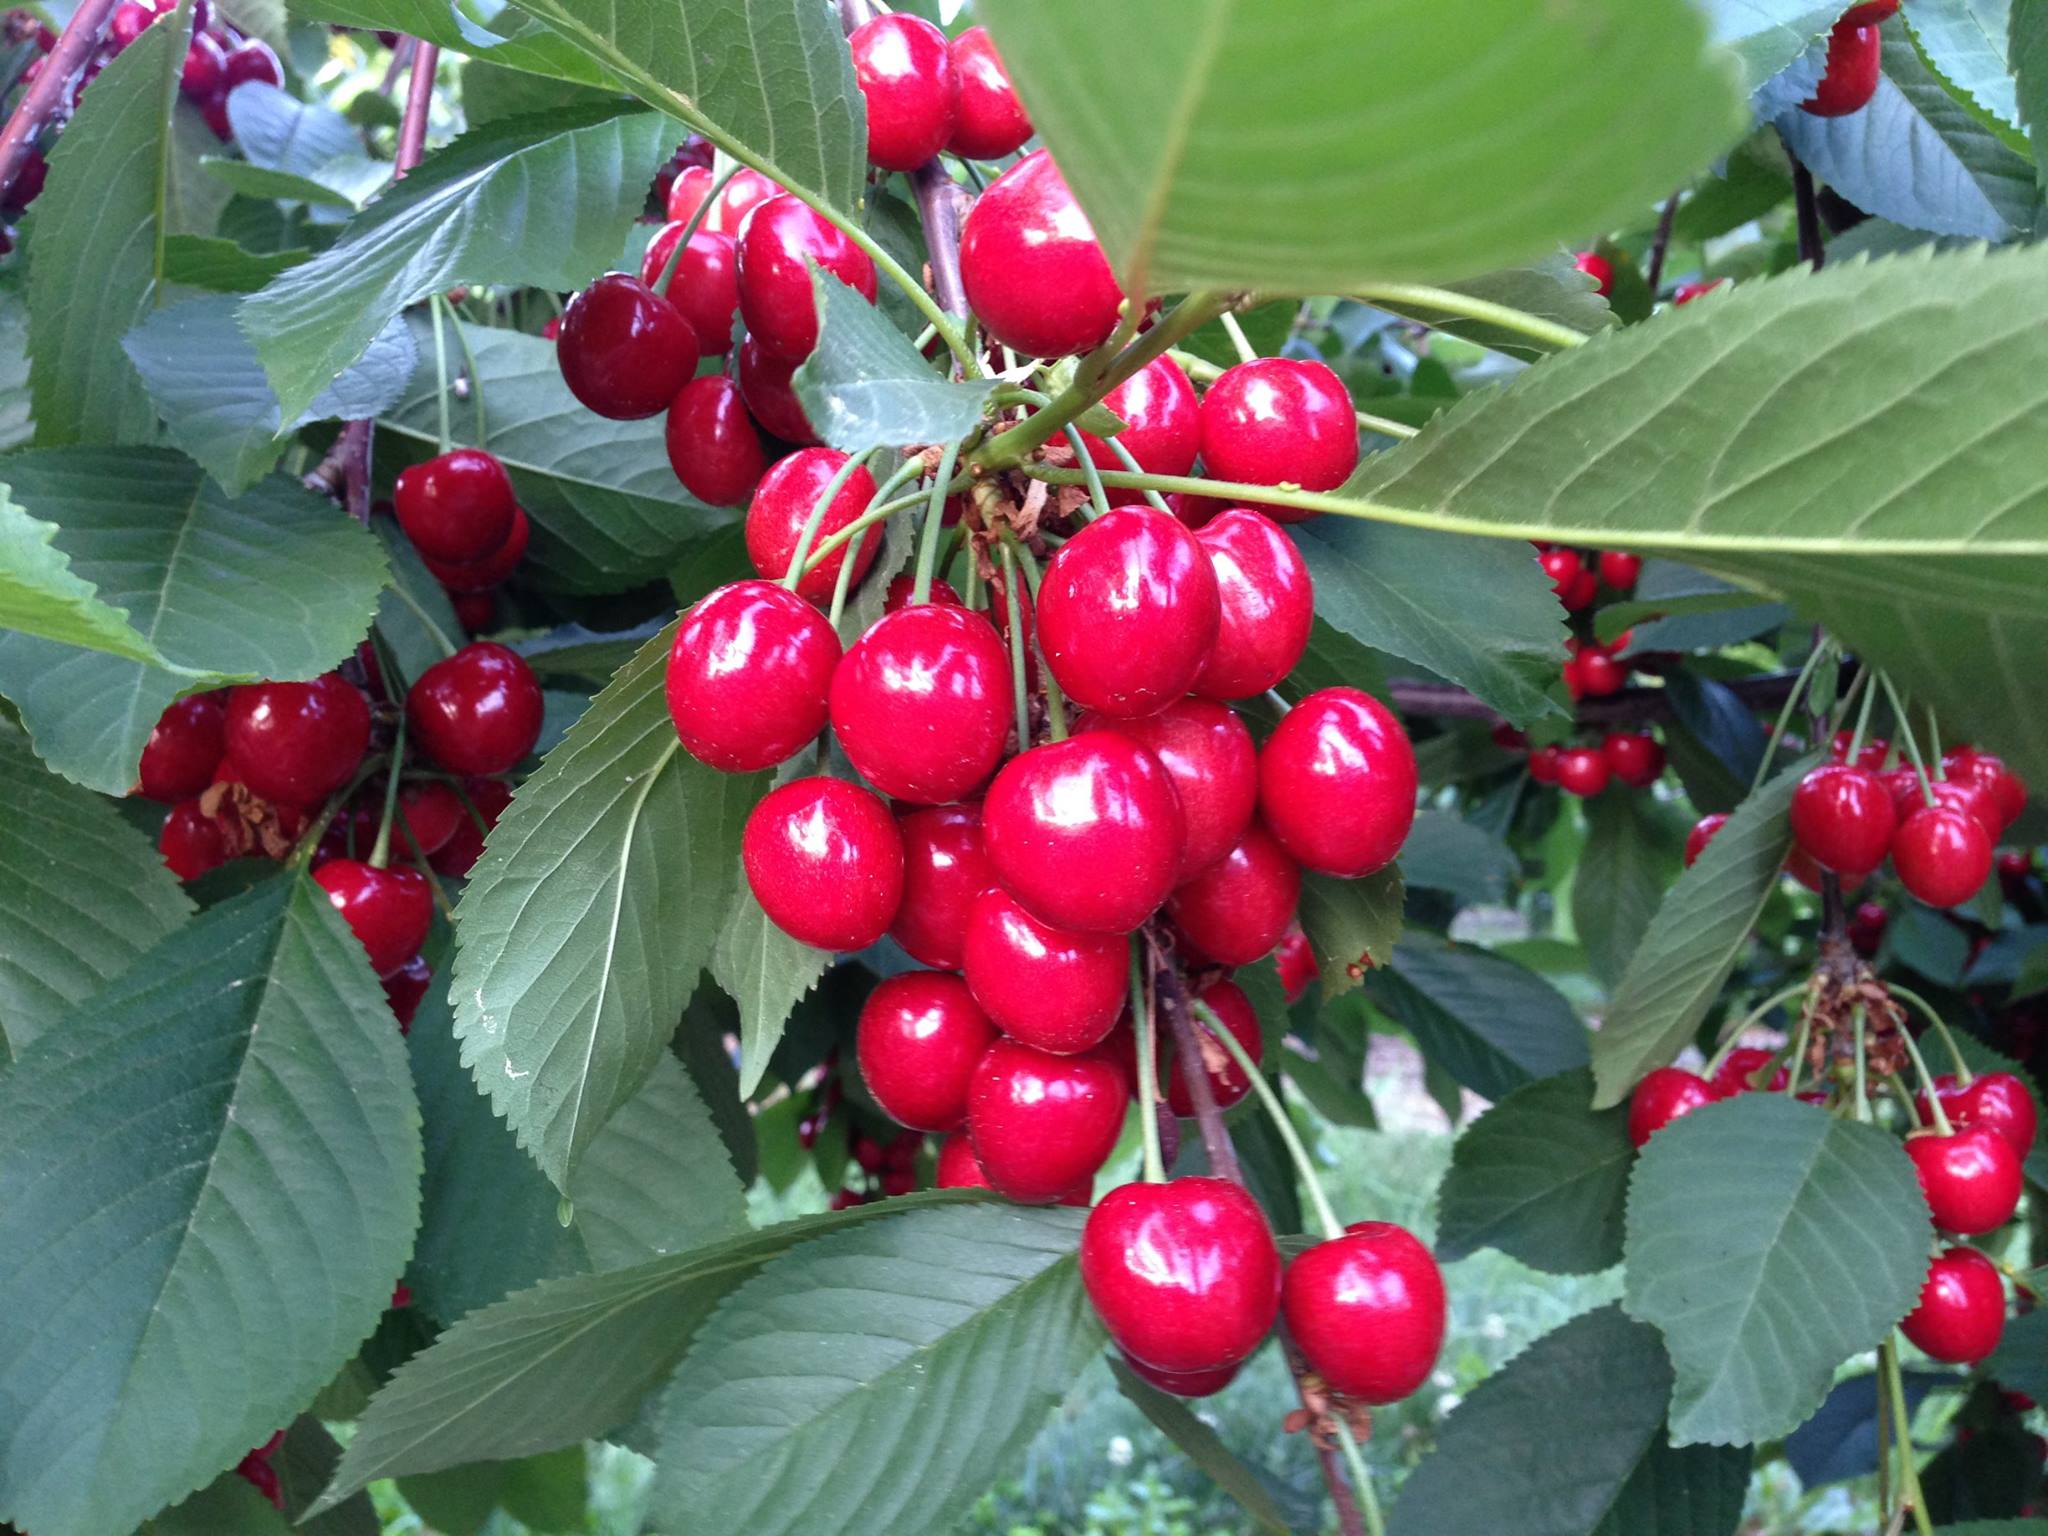 Sweet Cherries in New England